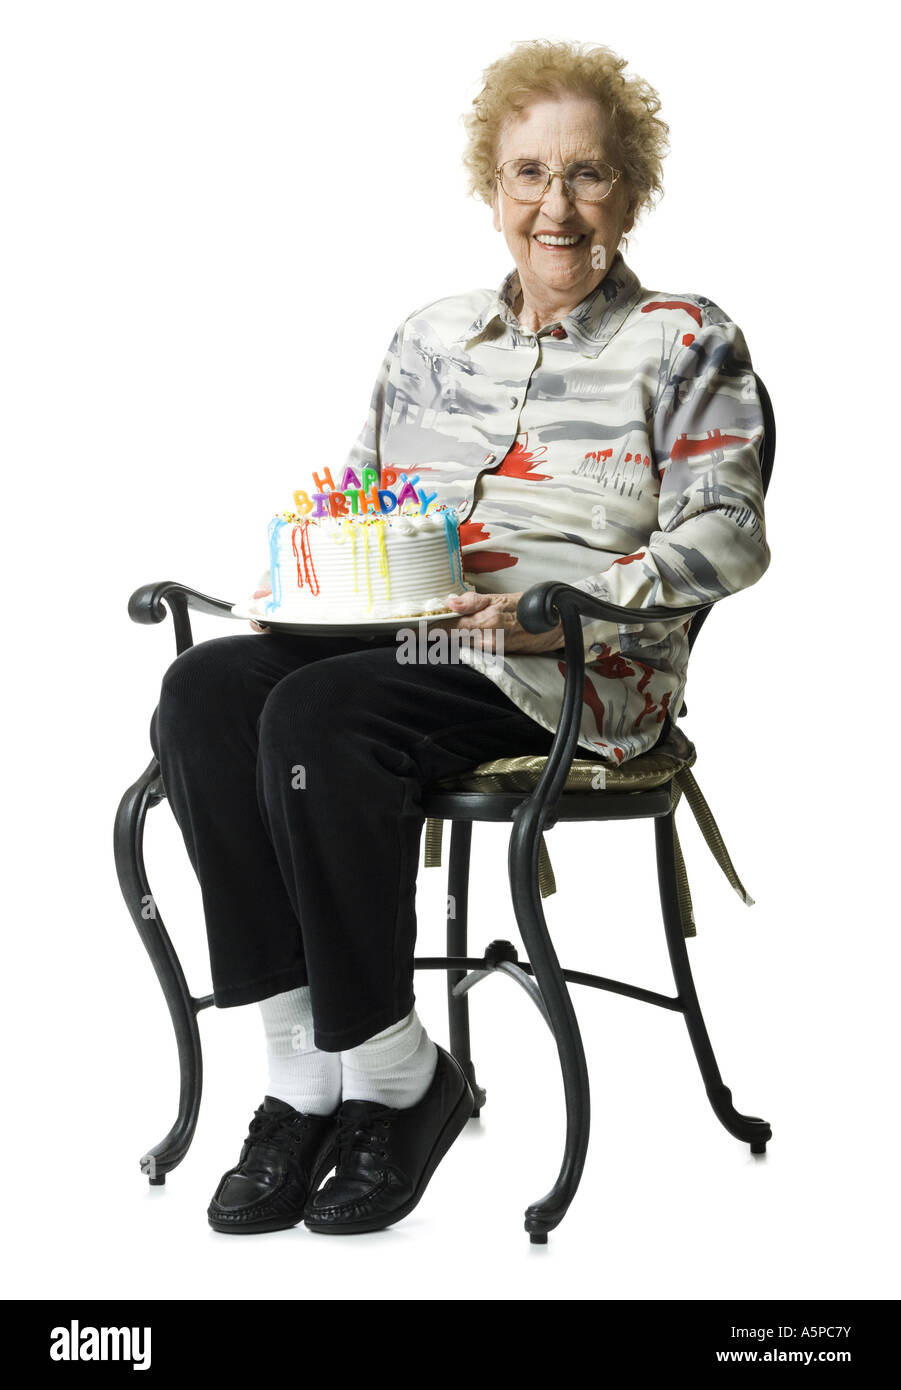 Elderly woman on her birthday with cake Stock Photo